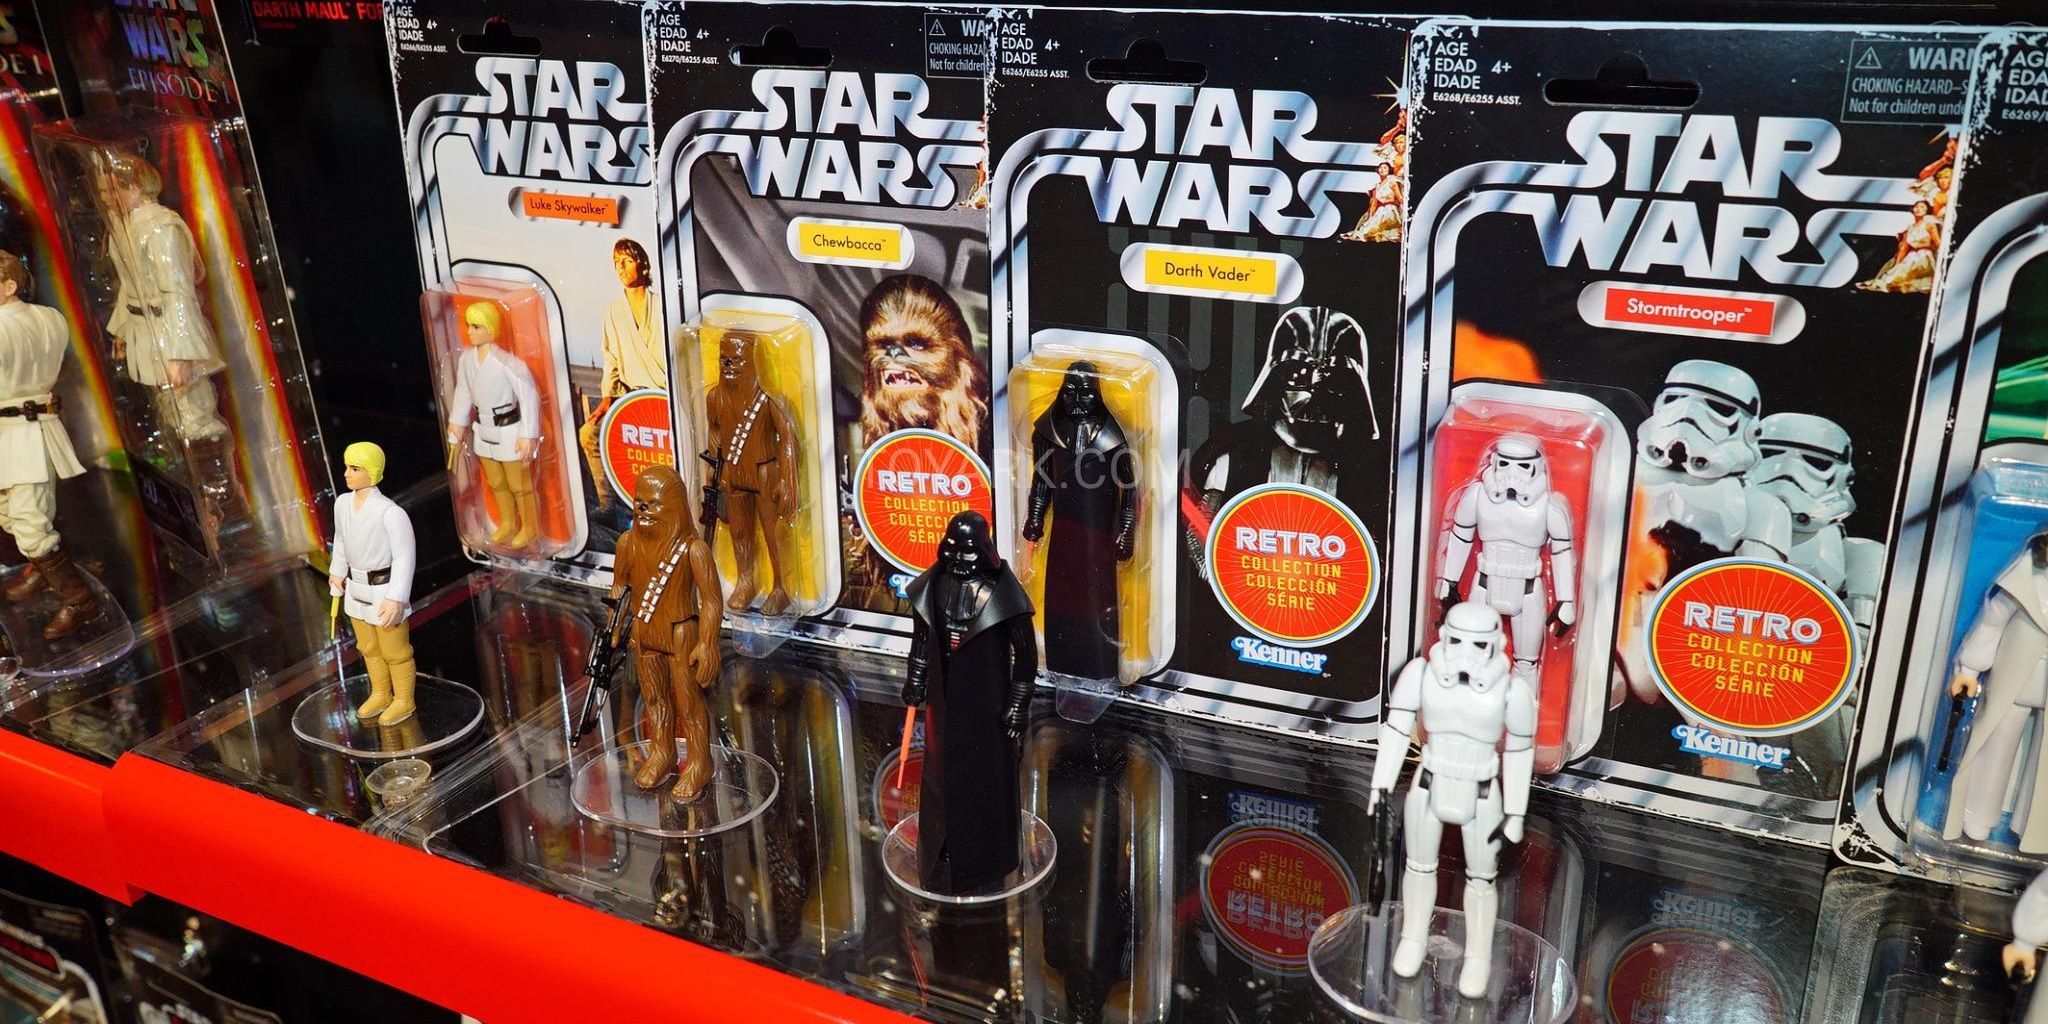 Star Wars toys